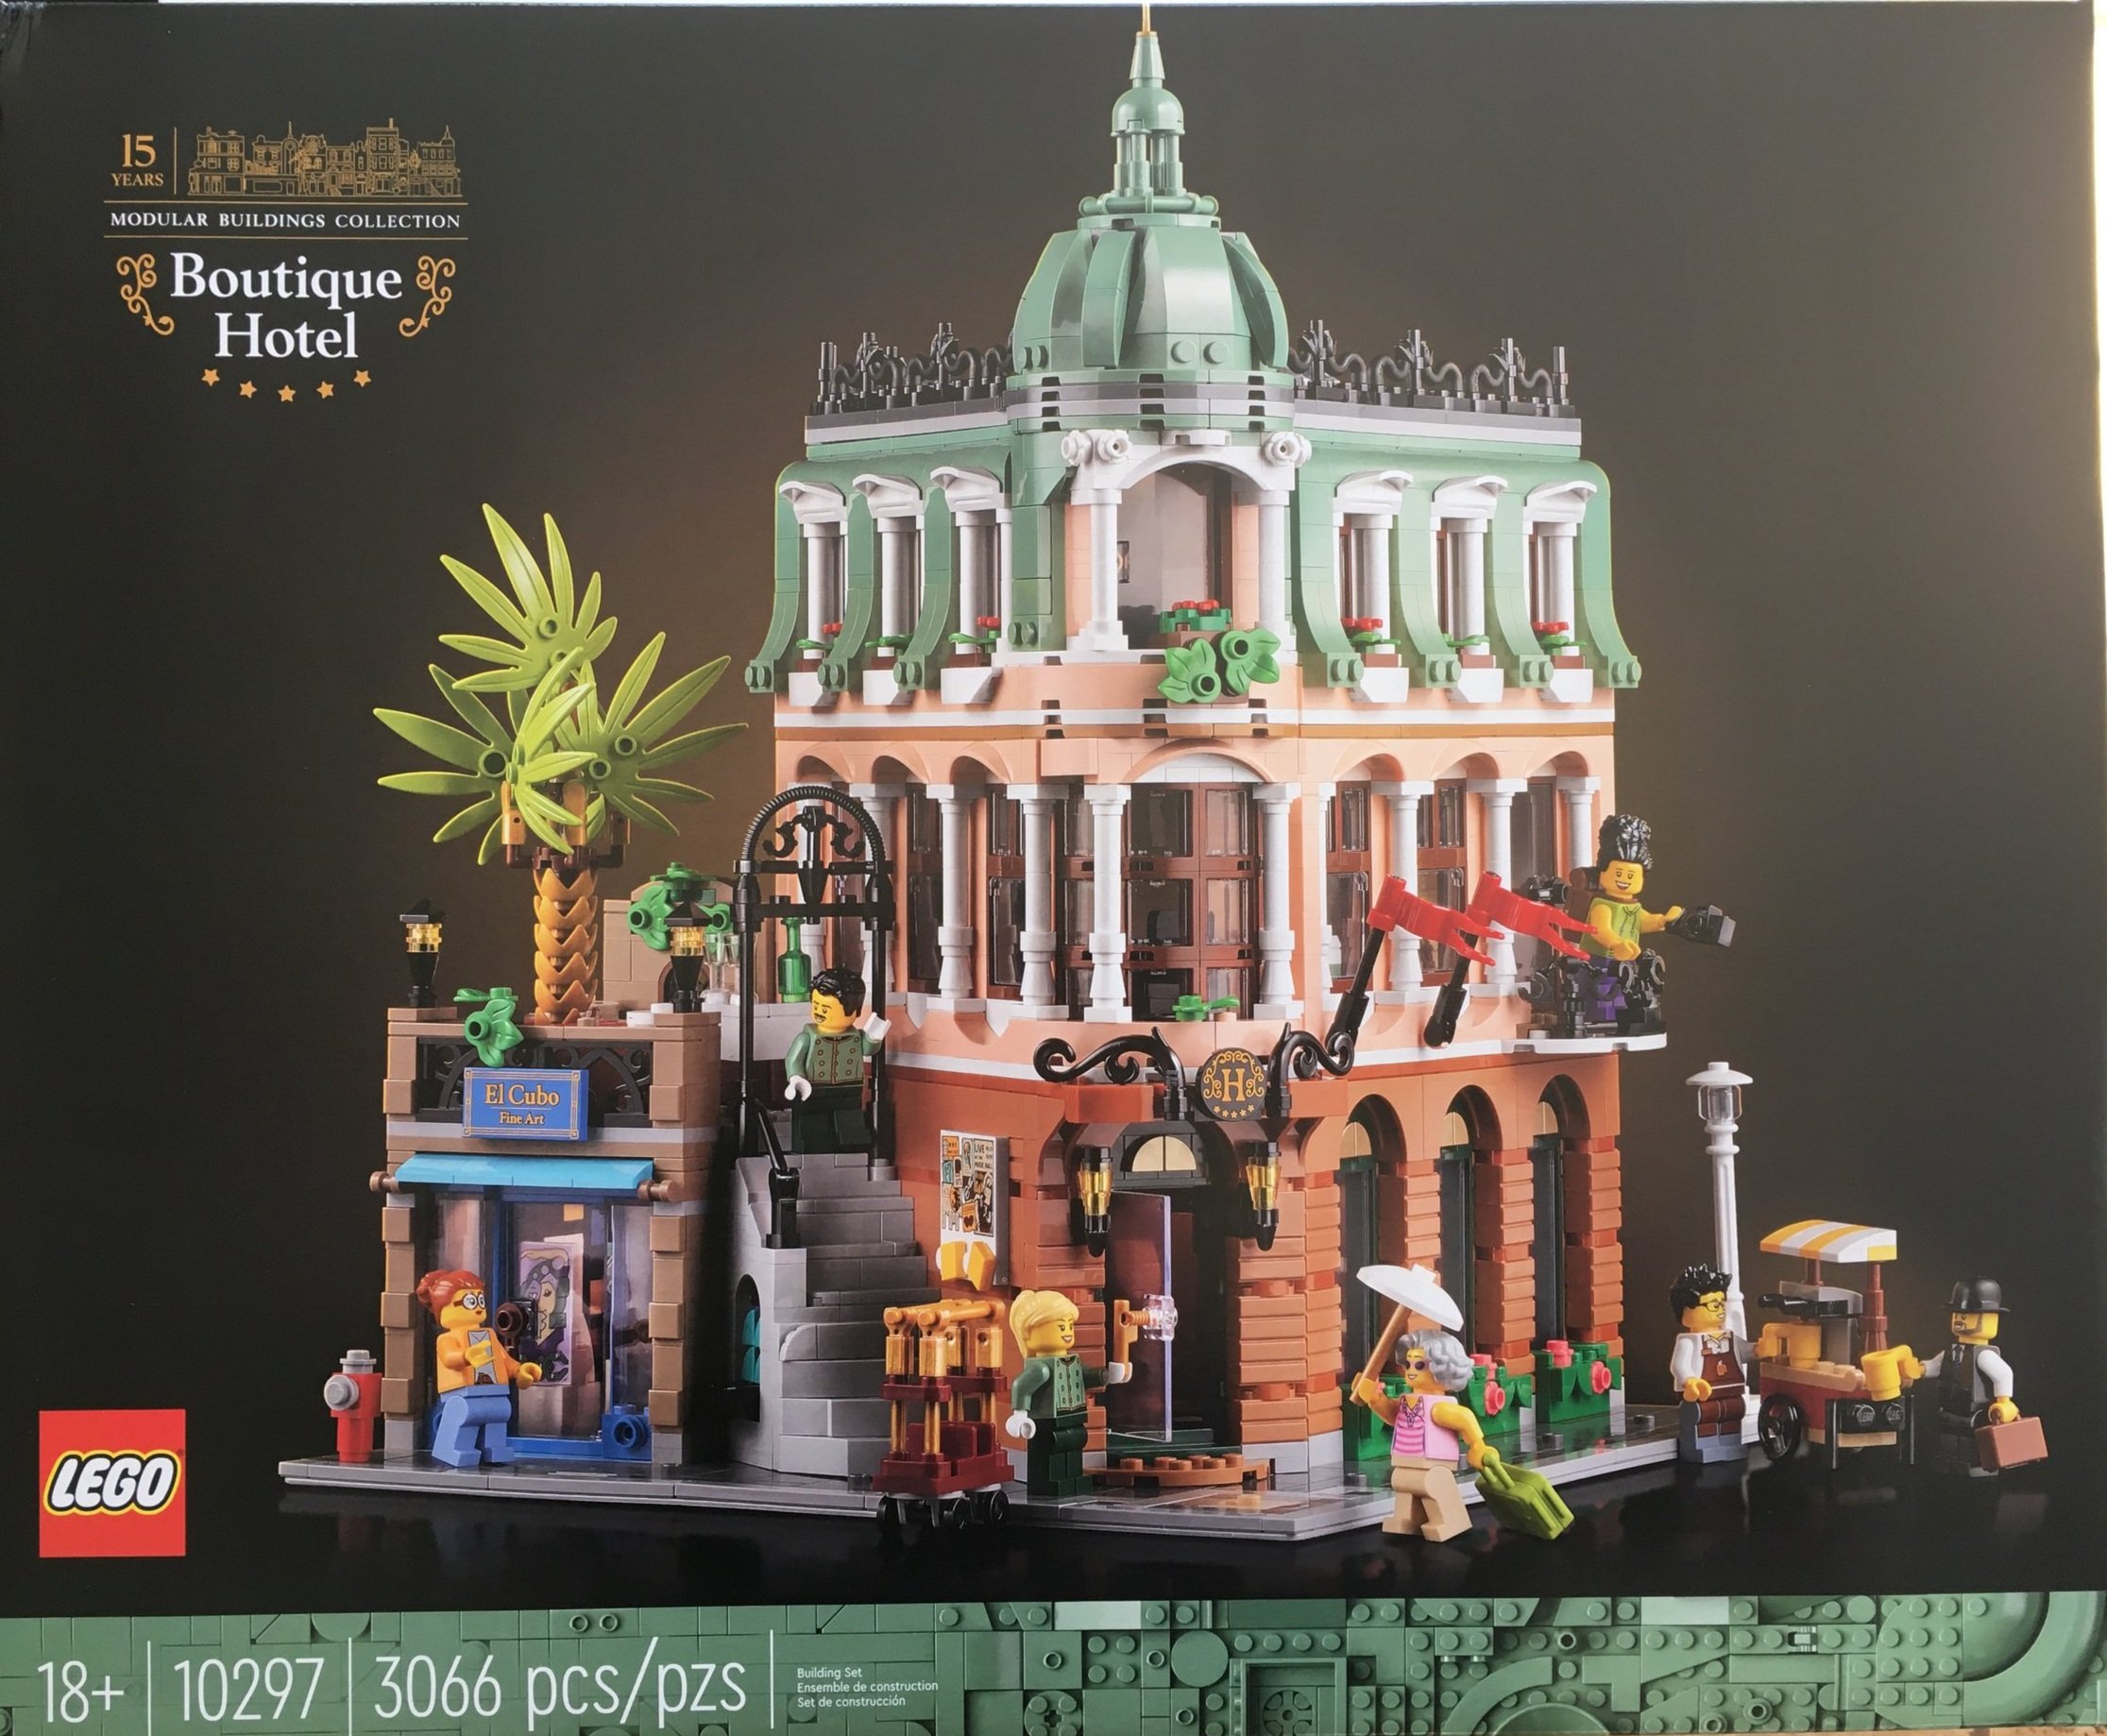 Raised Train Station, Amusement Park, & Modulars! LEGO City Update